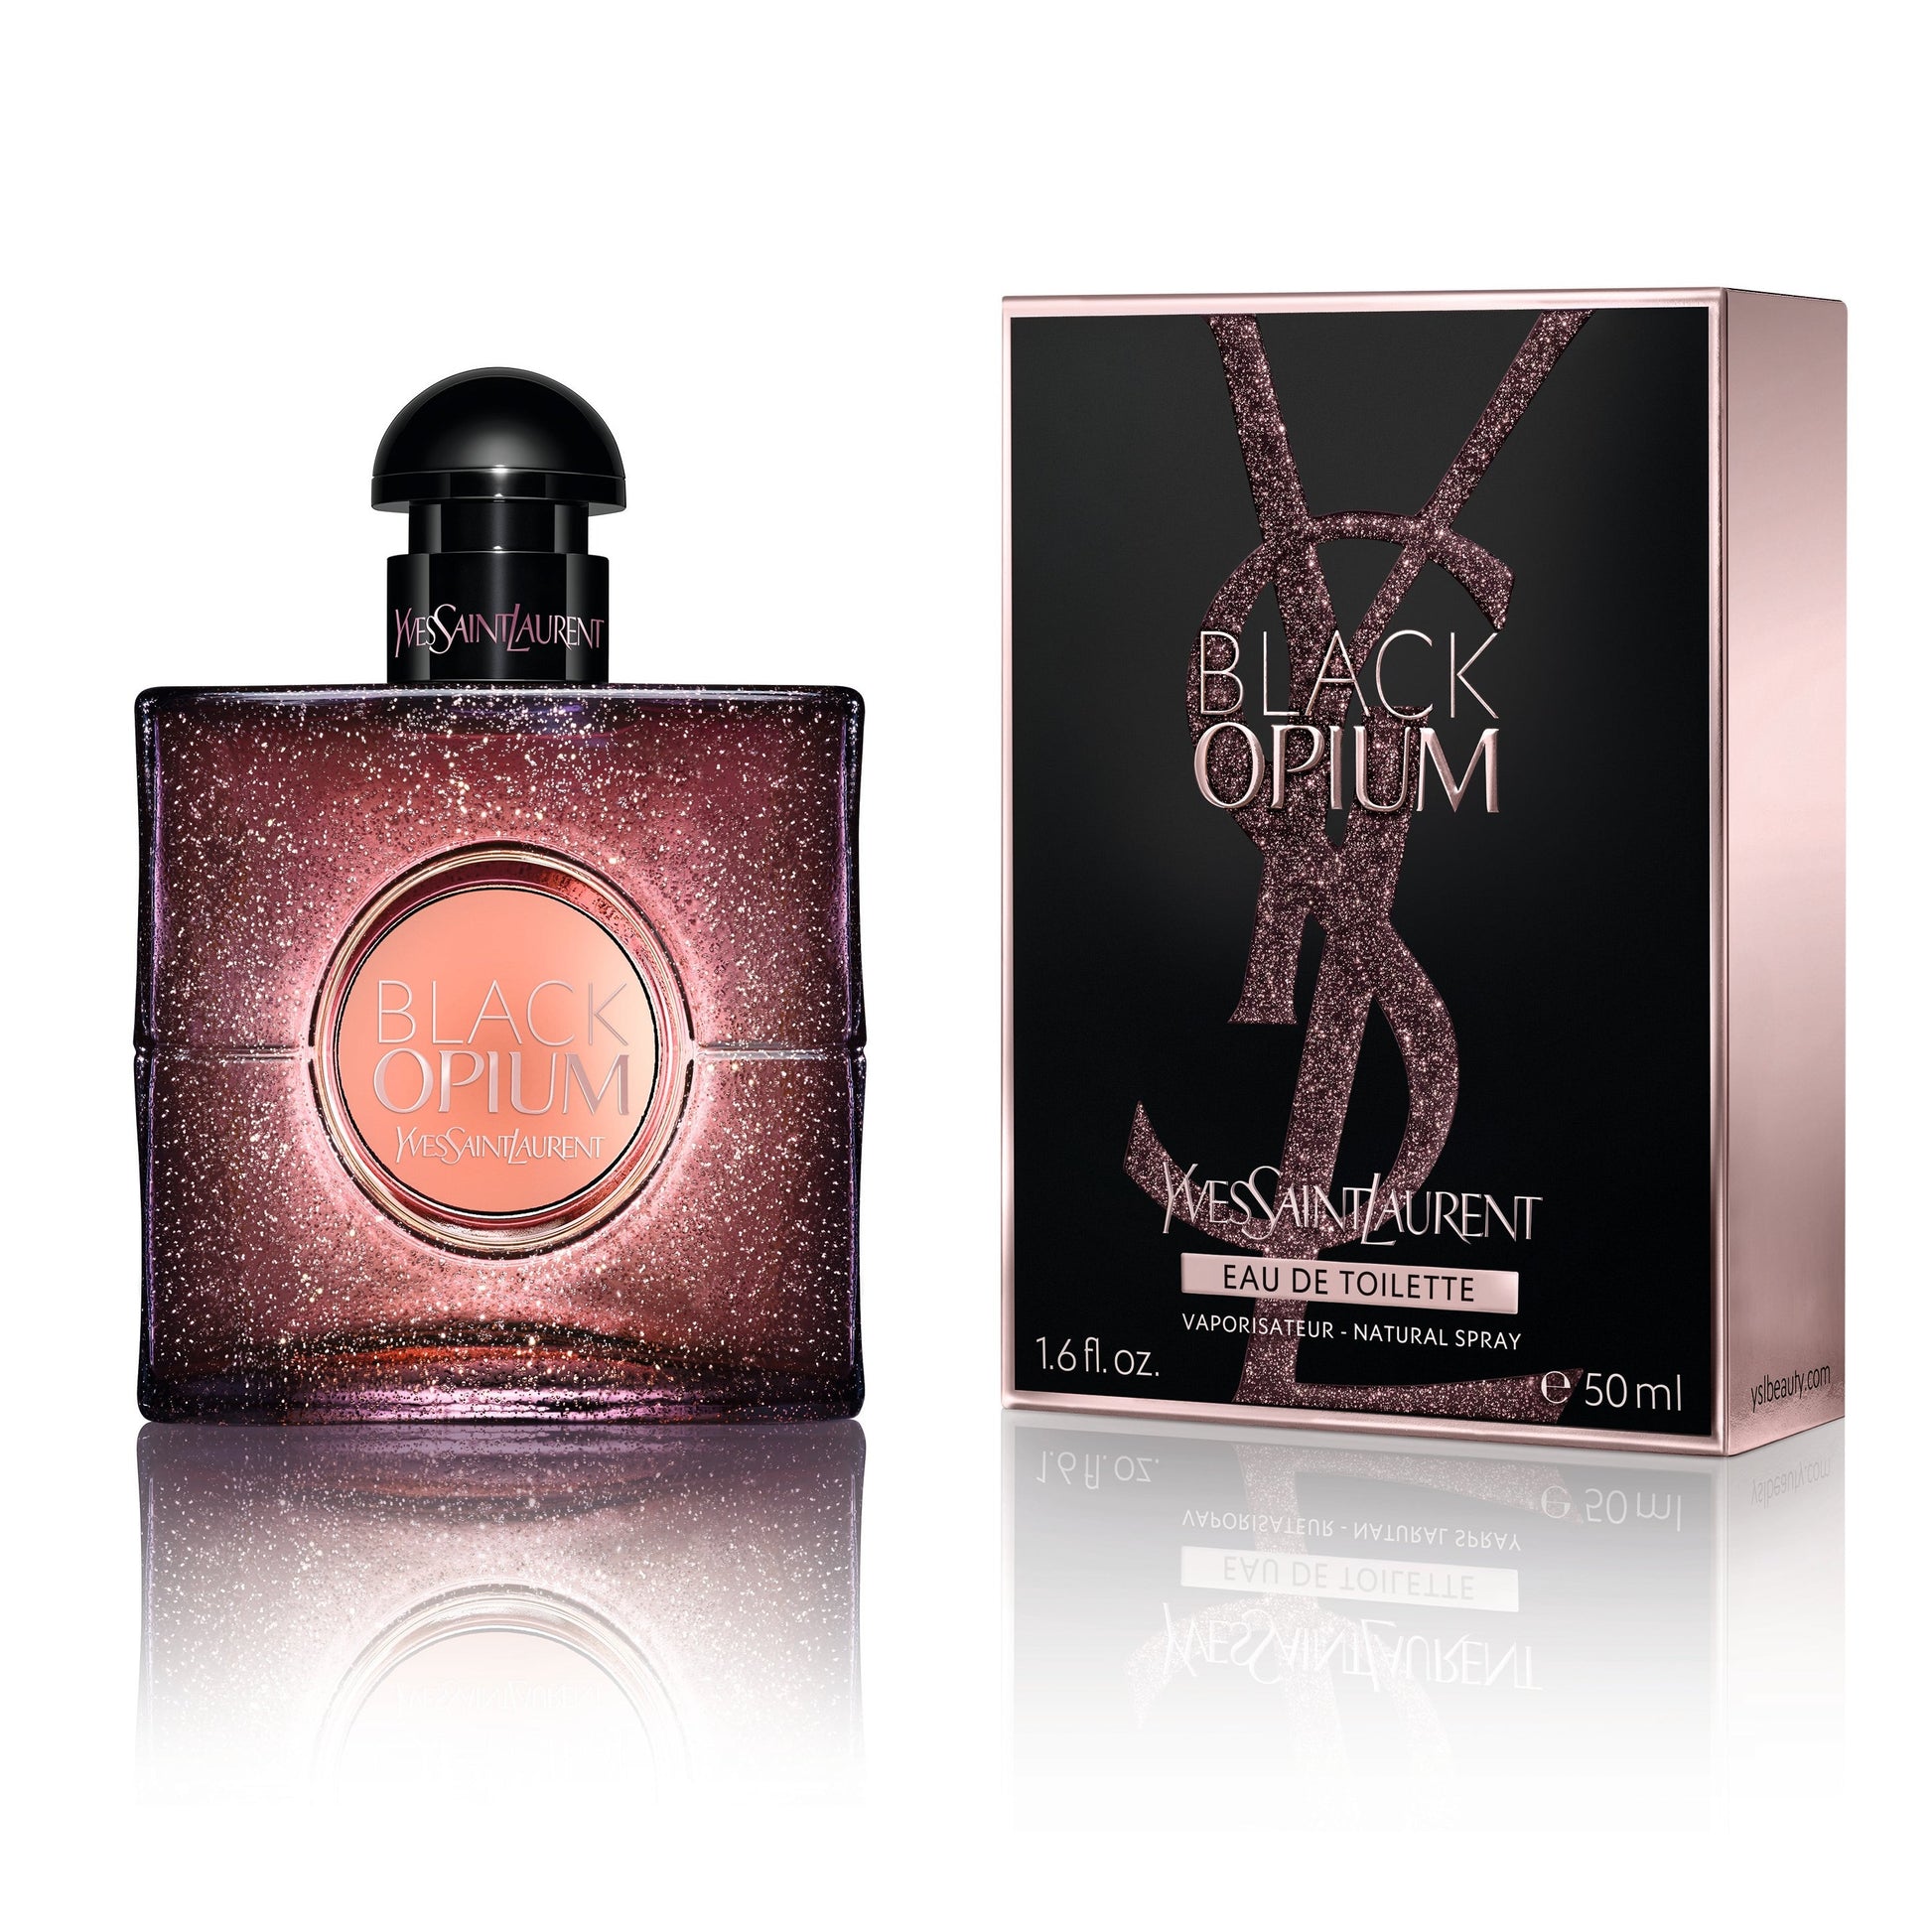 Black Opium Eau de Toilette - Perfumería First Bolivia